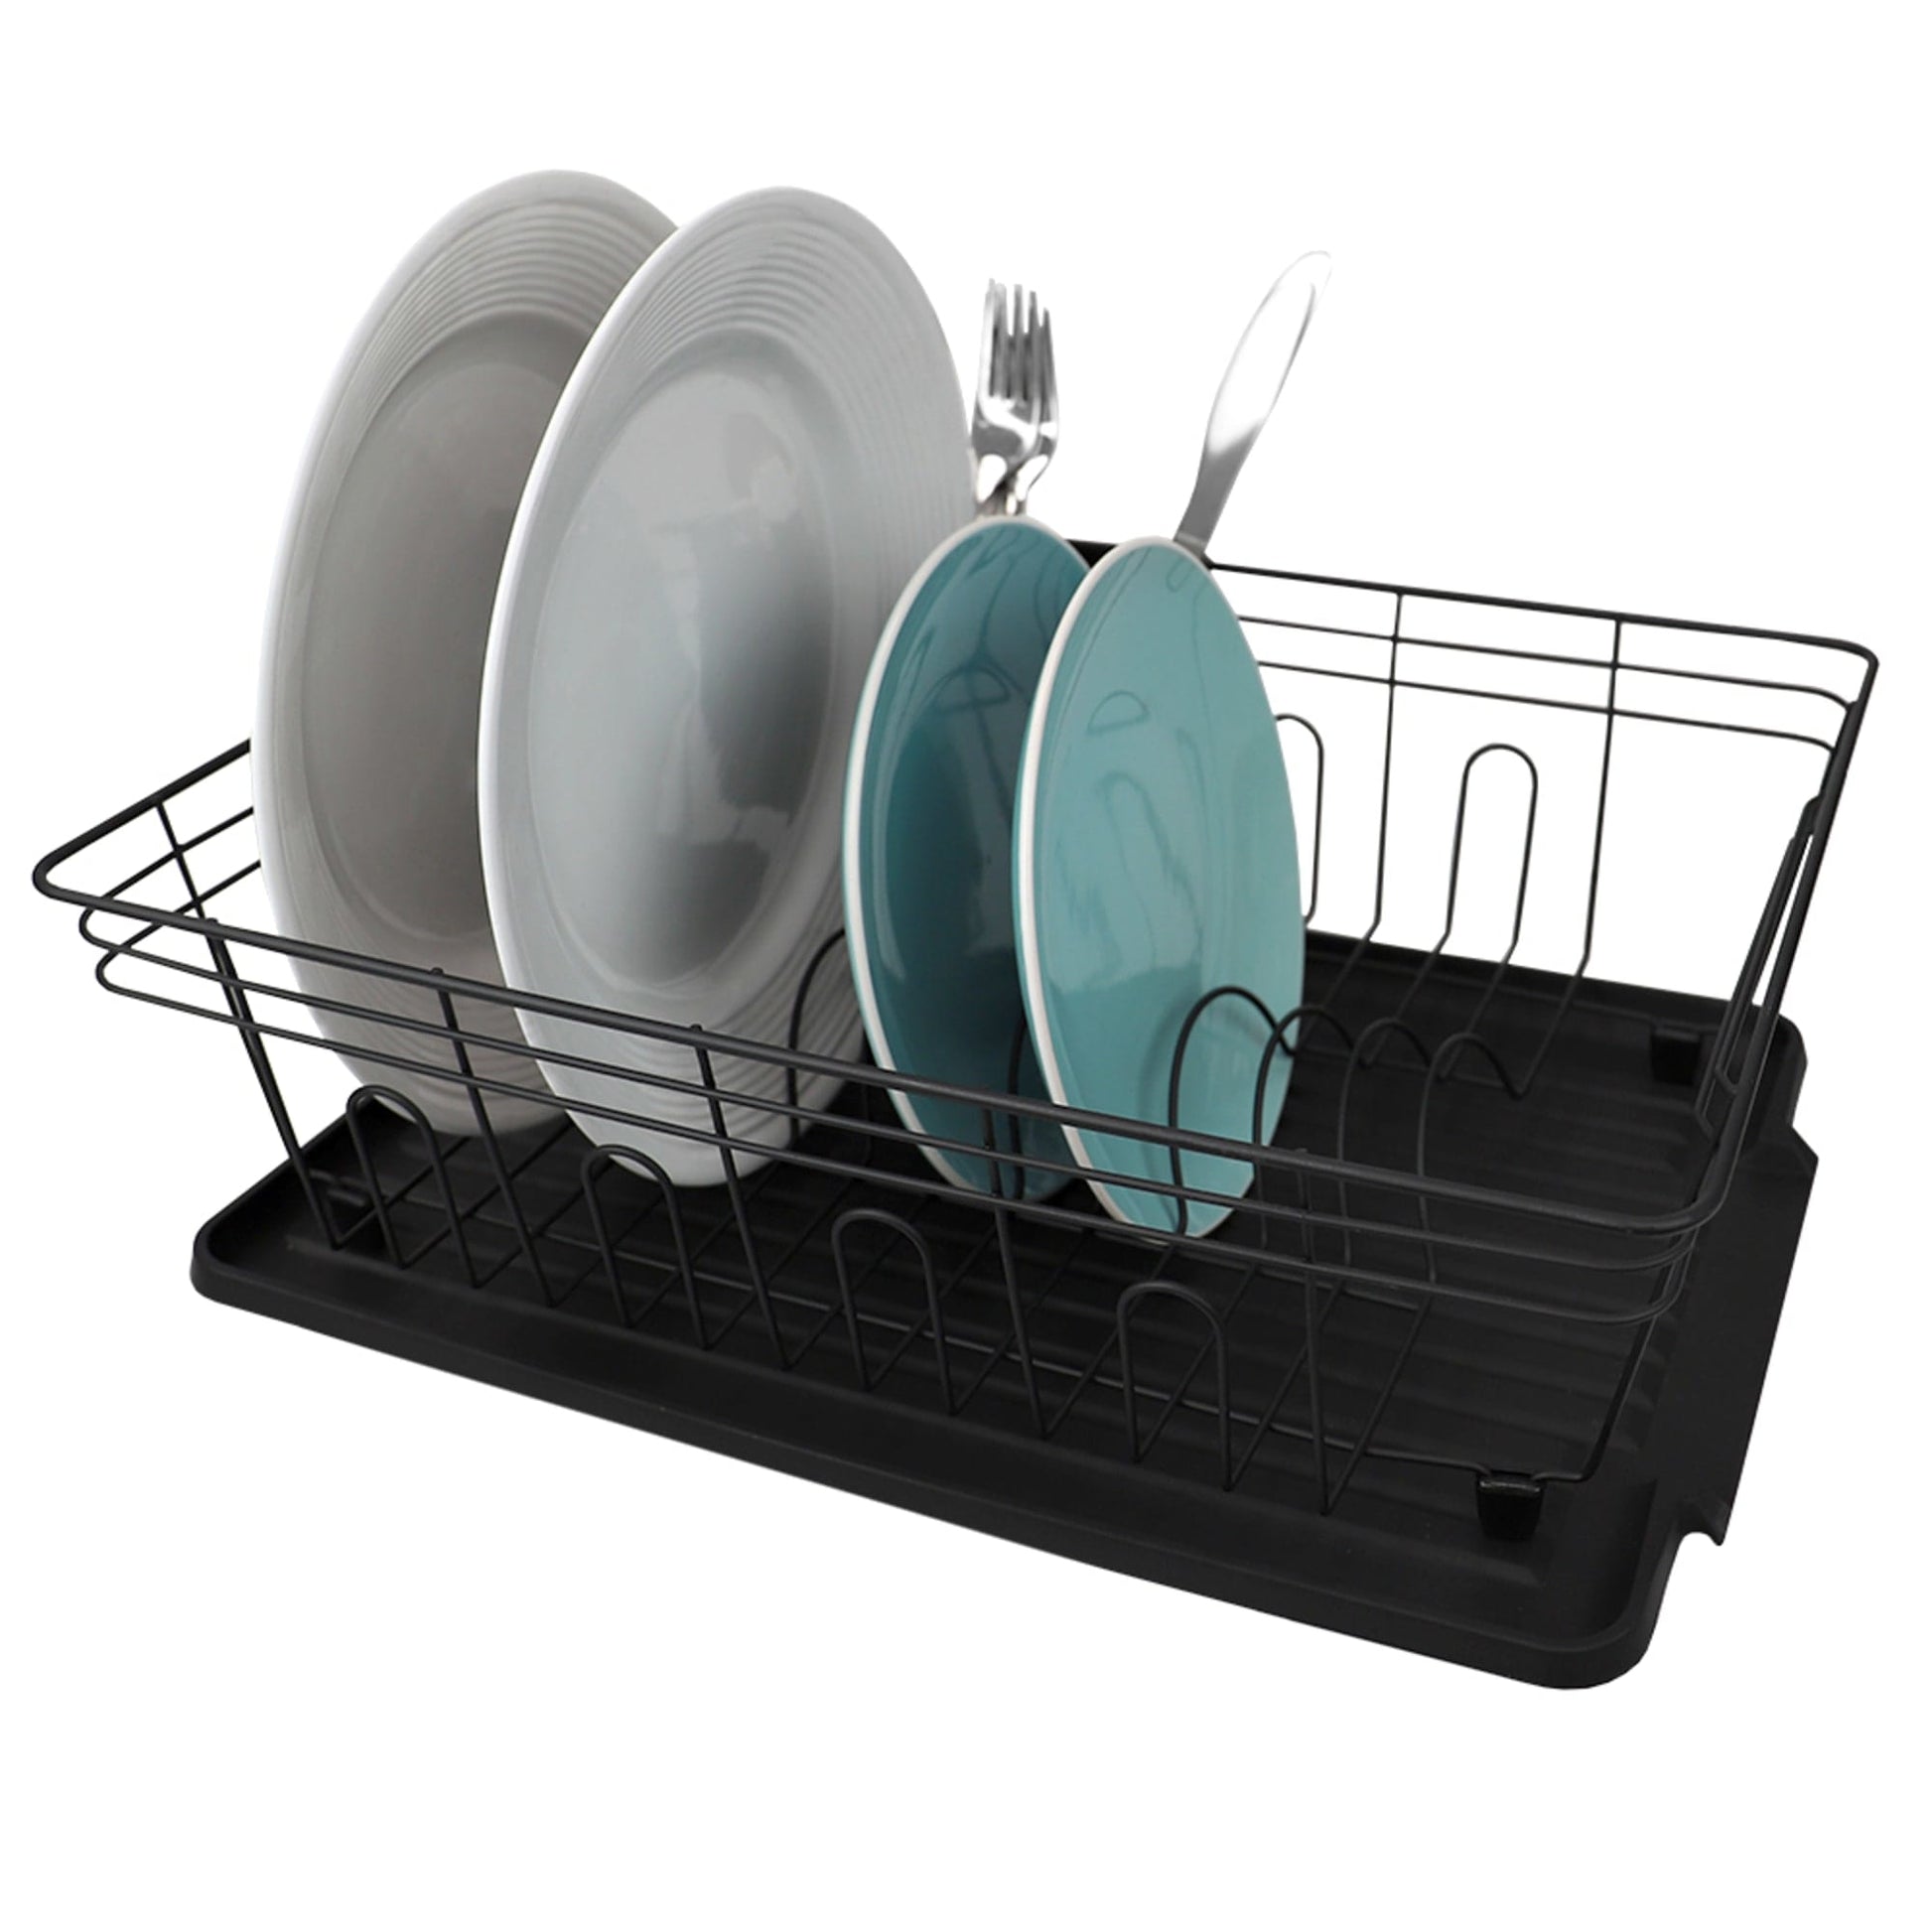 Home Basics 2 Tier Plastic Dish Drainer, Turquoise, KITCHEN ORGANIZATION